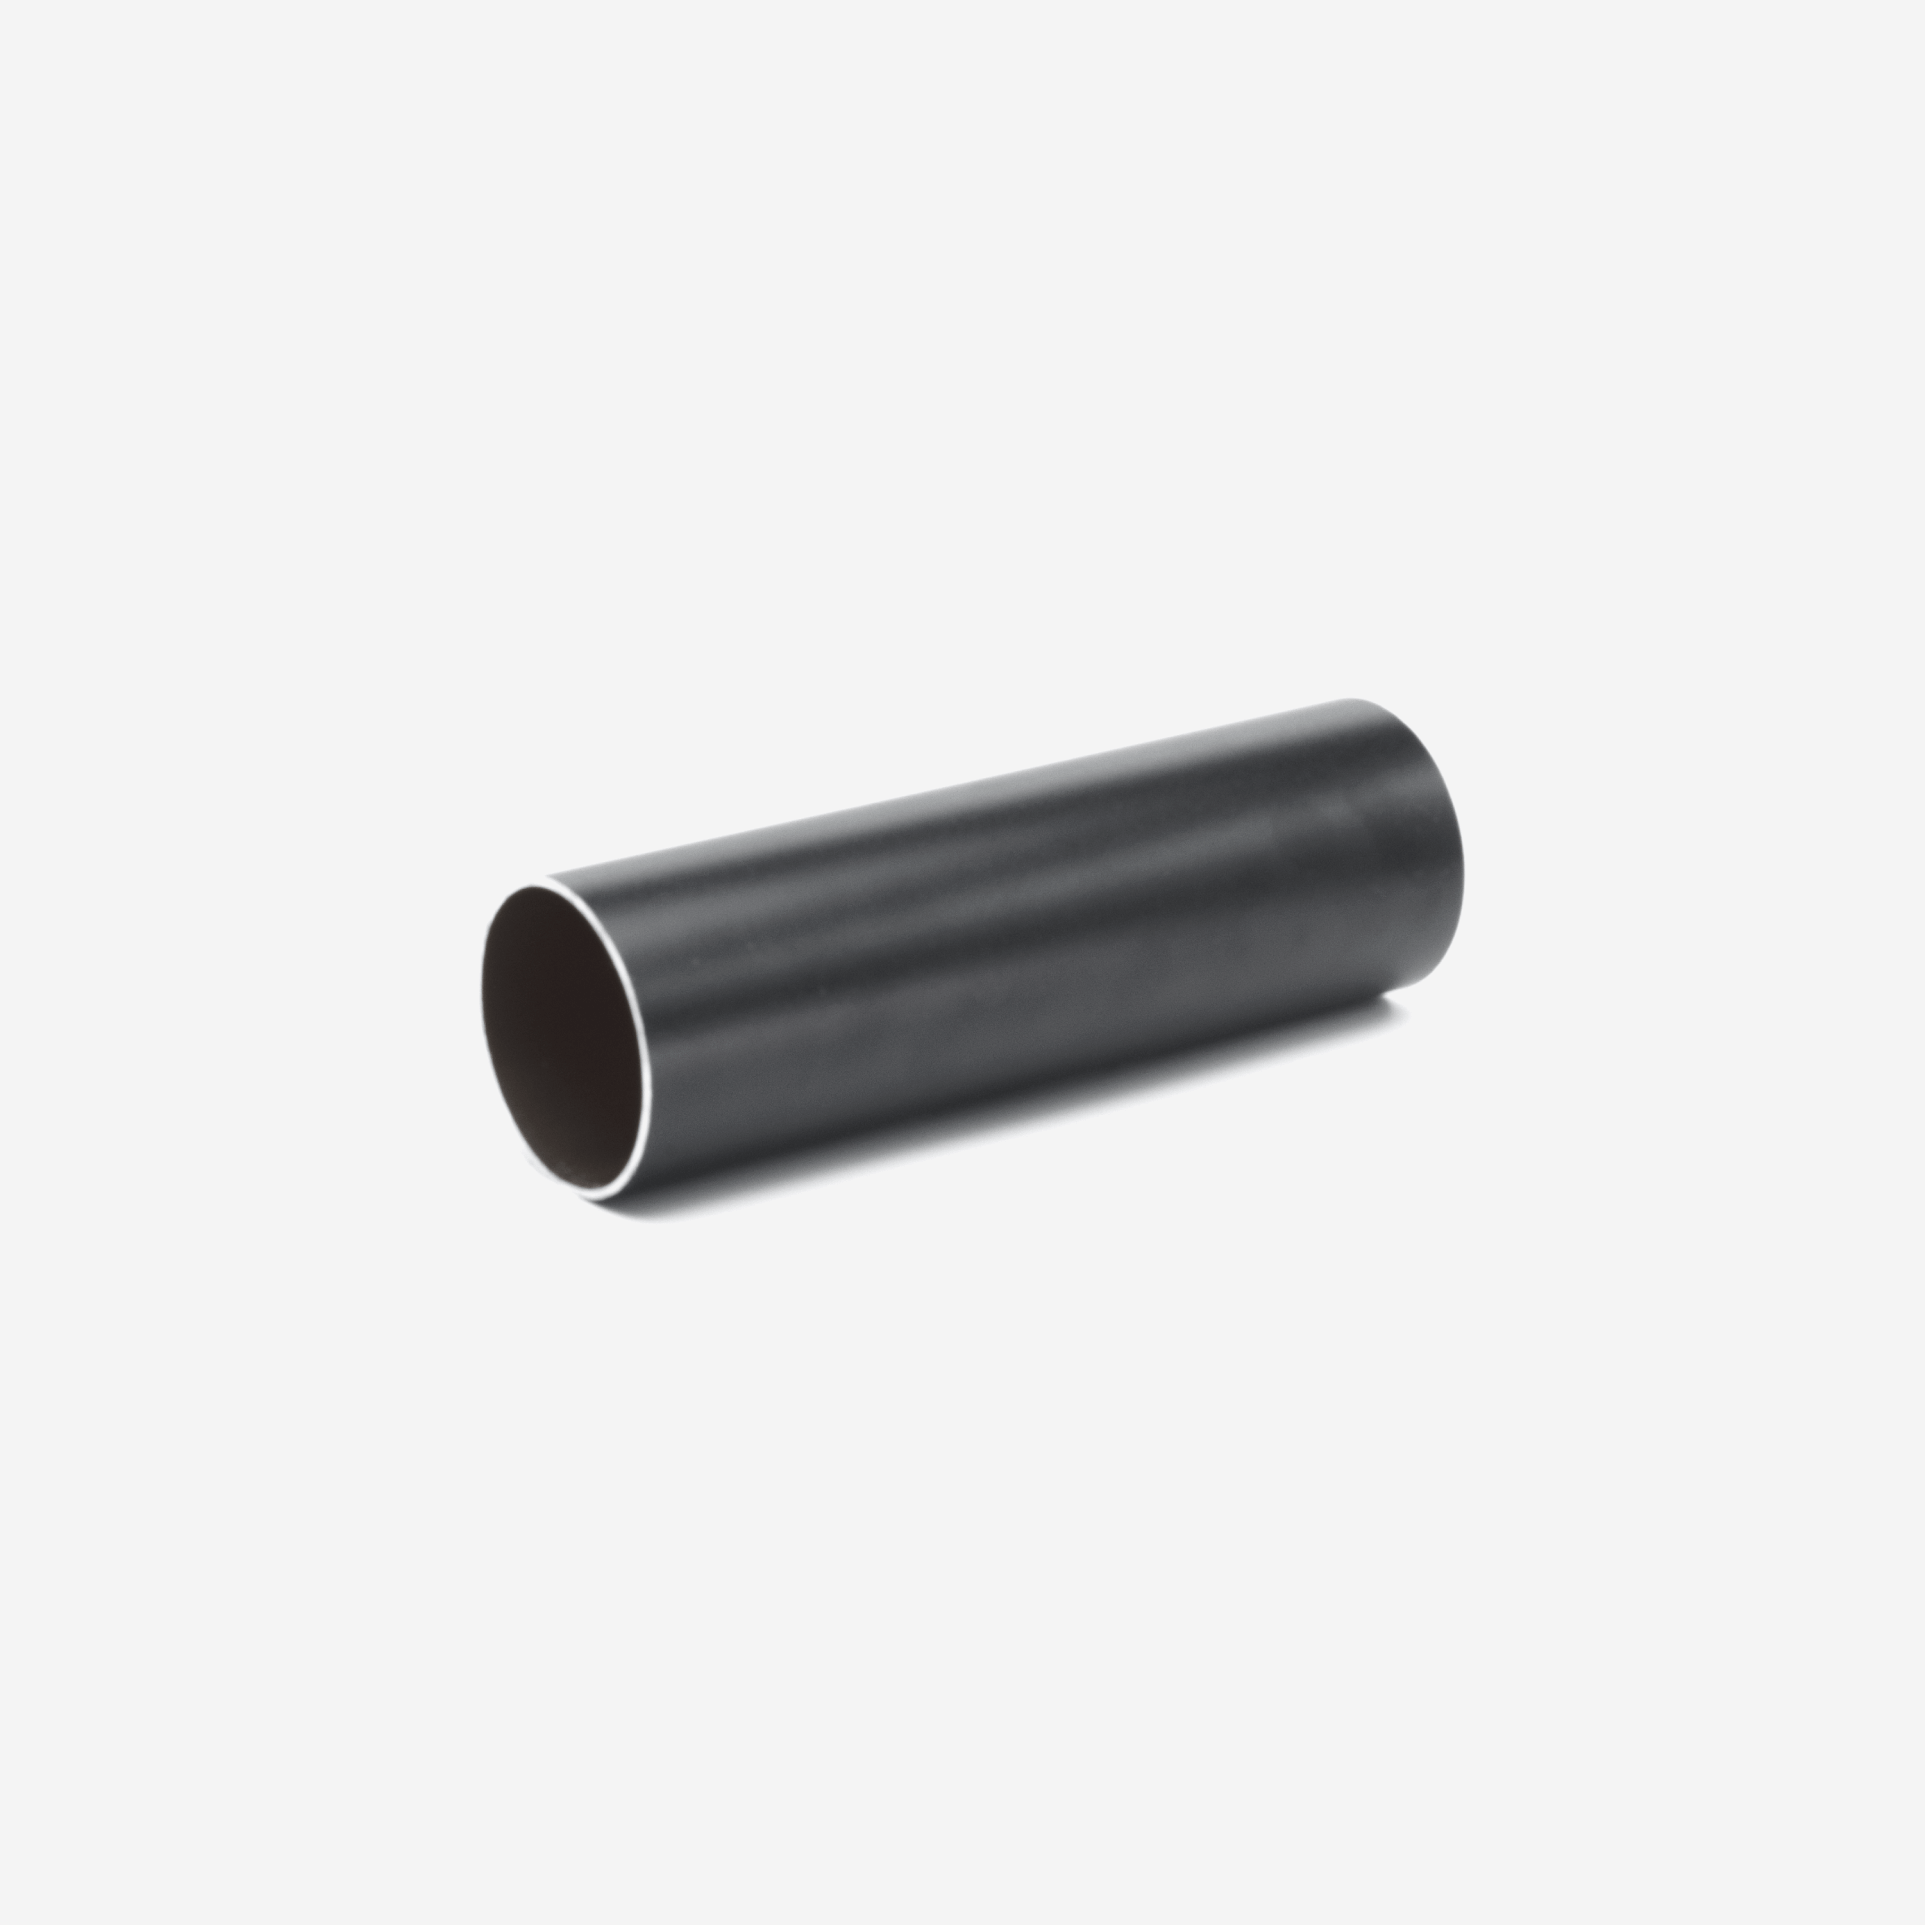 Round Aluminum Connector 232" Stock Length - Black matte